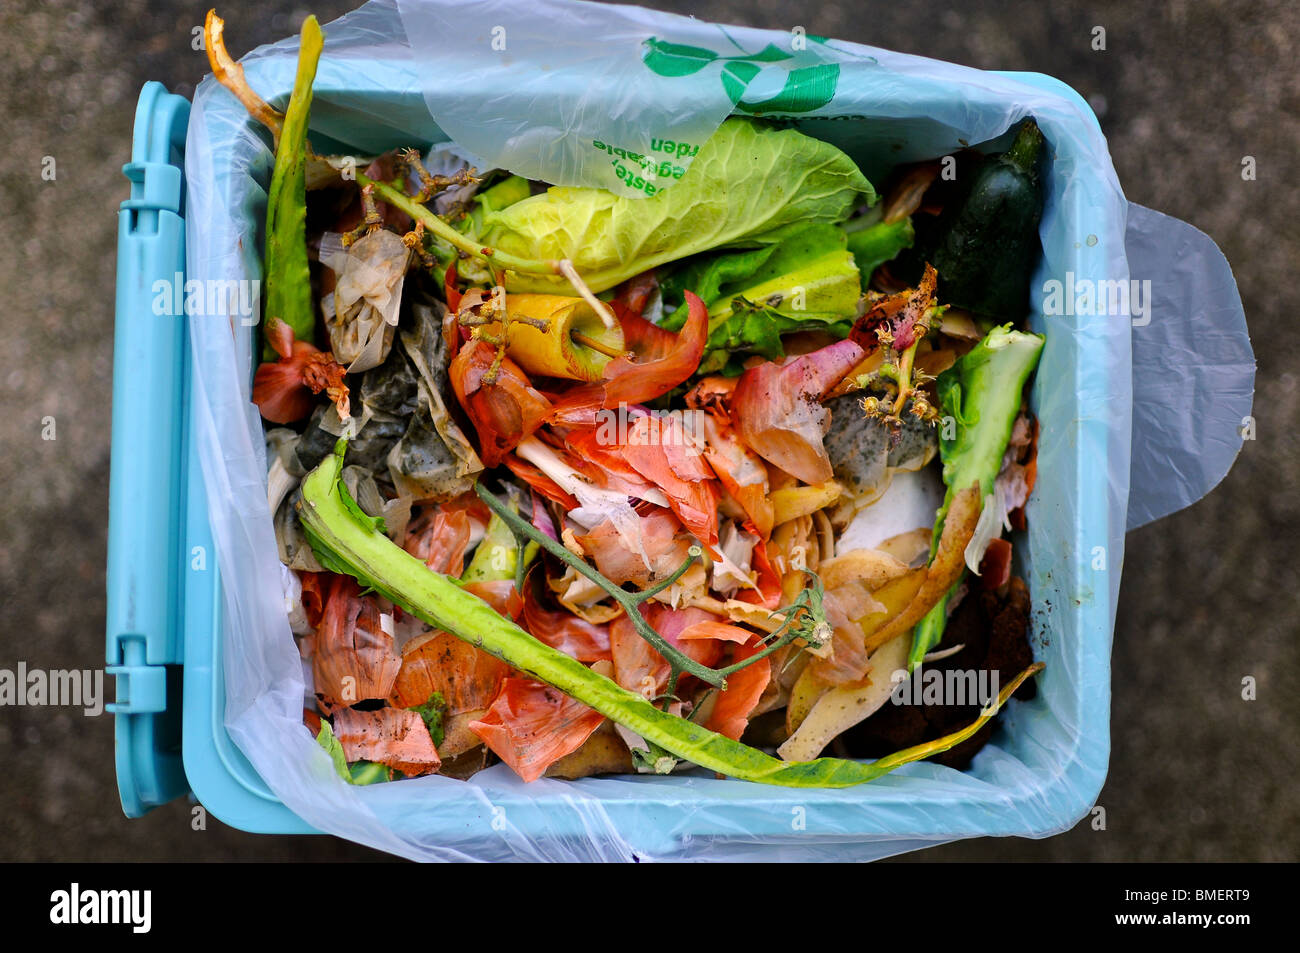 Composteur de cuisine JOSEPH JOSEPH de table Food Waste Caddy